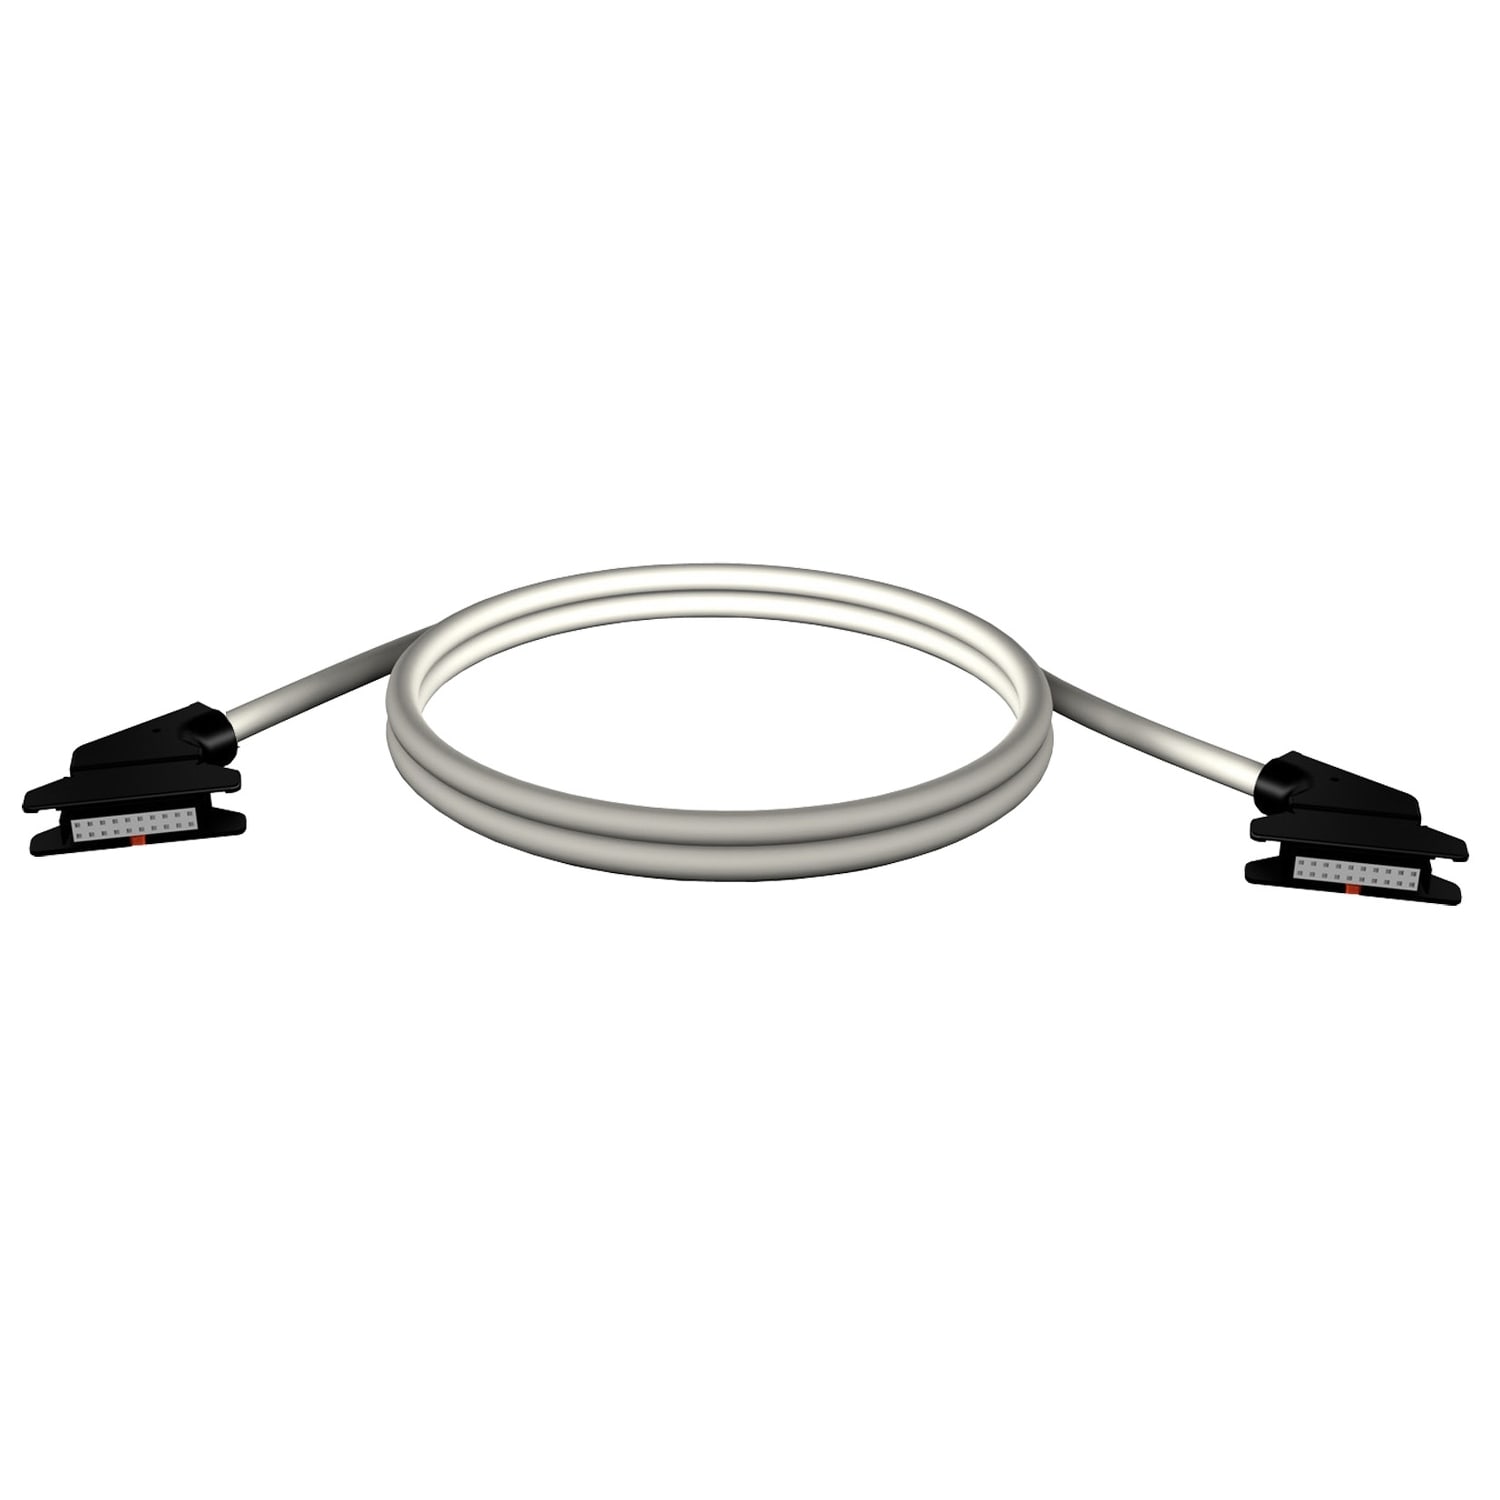 Schneider Electric - Modicon - cable de connexion - Modicon Premium - 2 m - pour embase ABE7H16R20